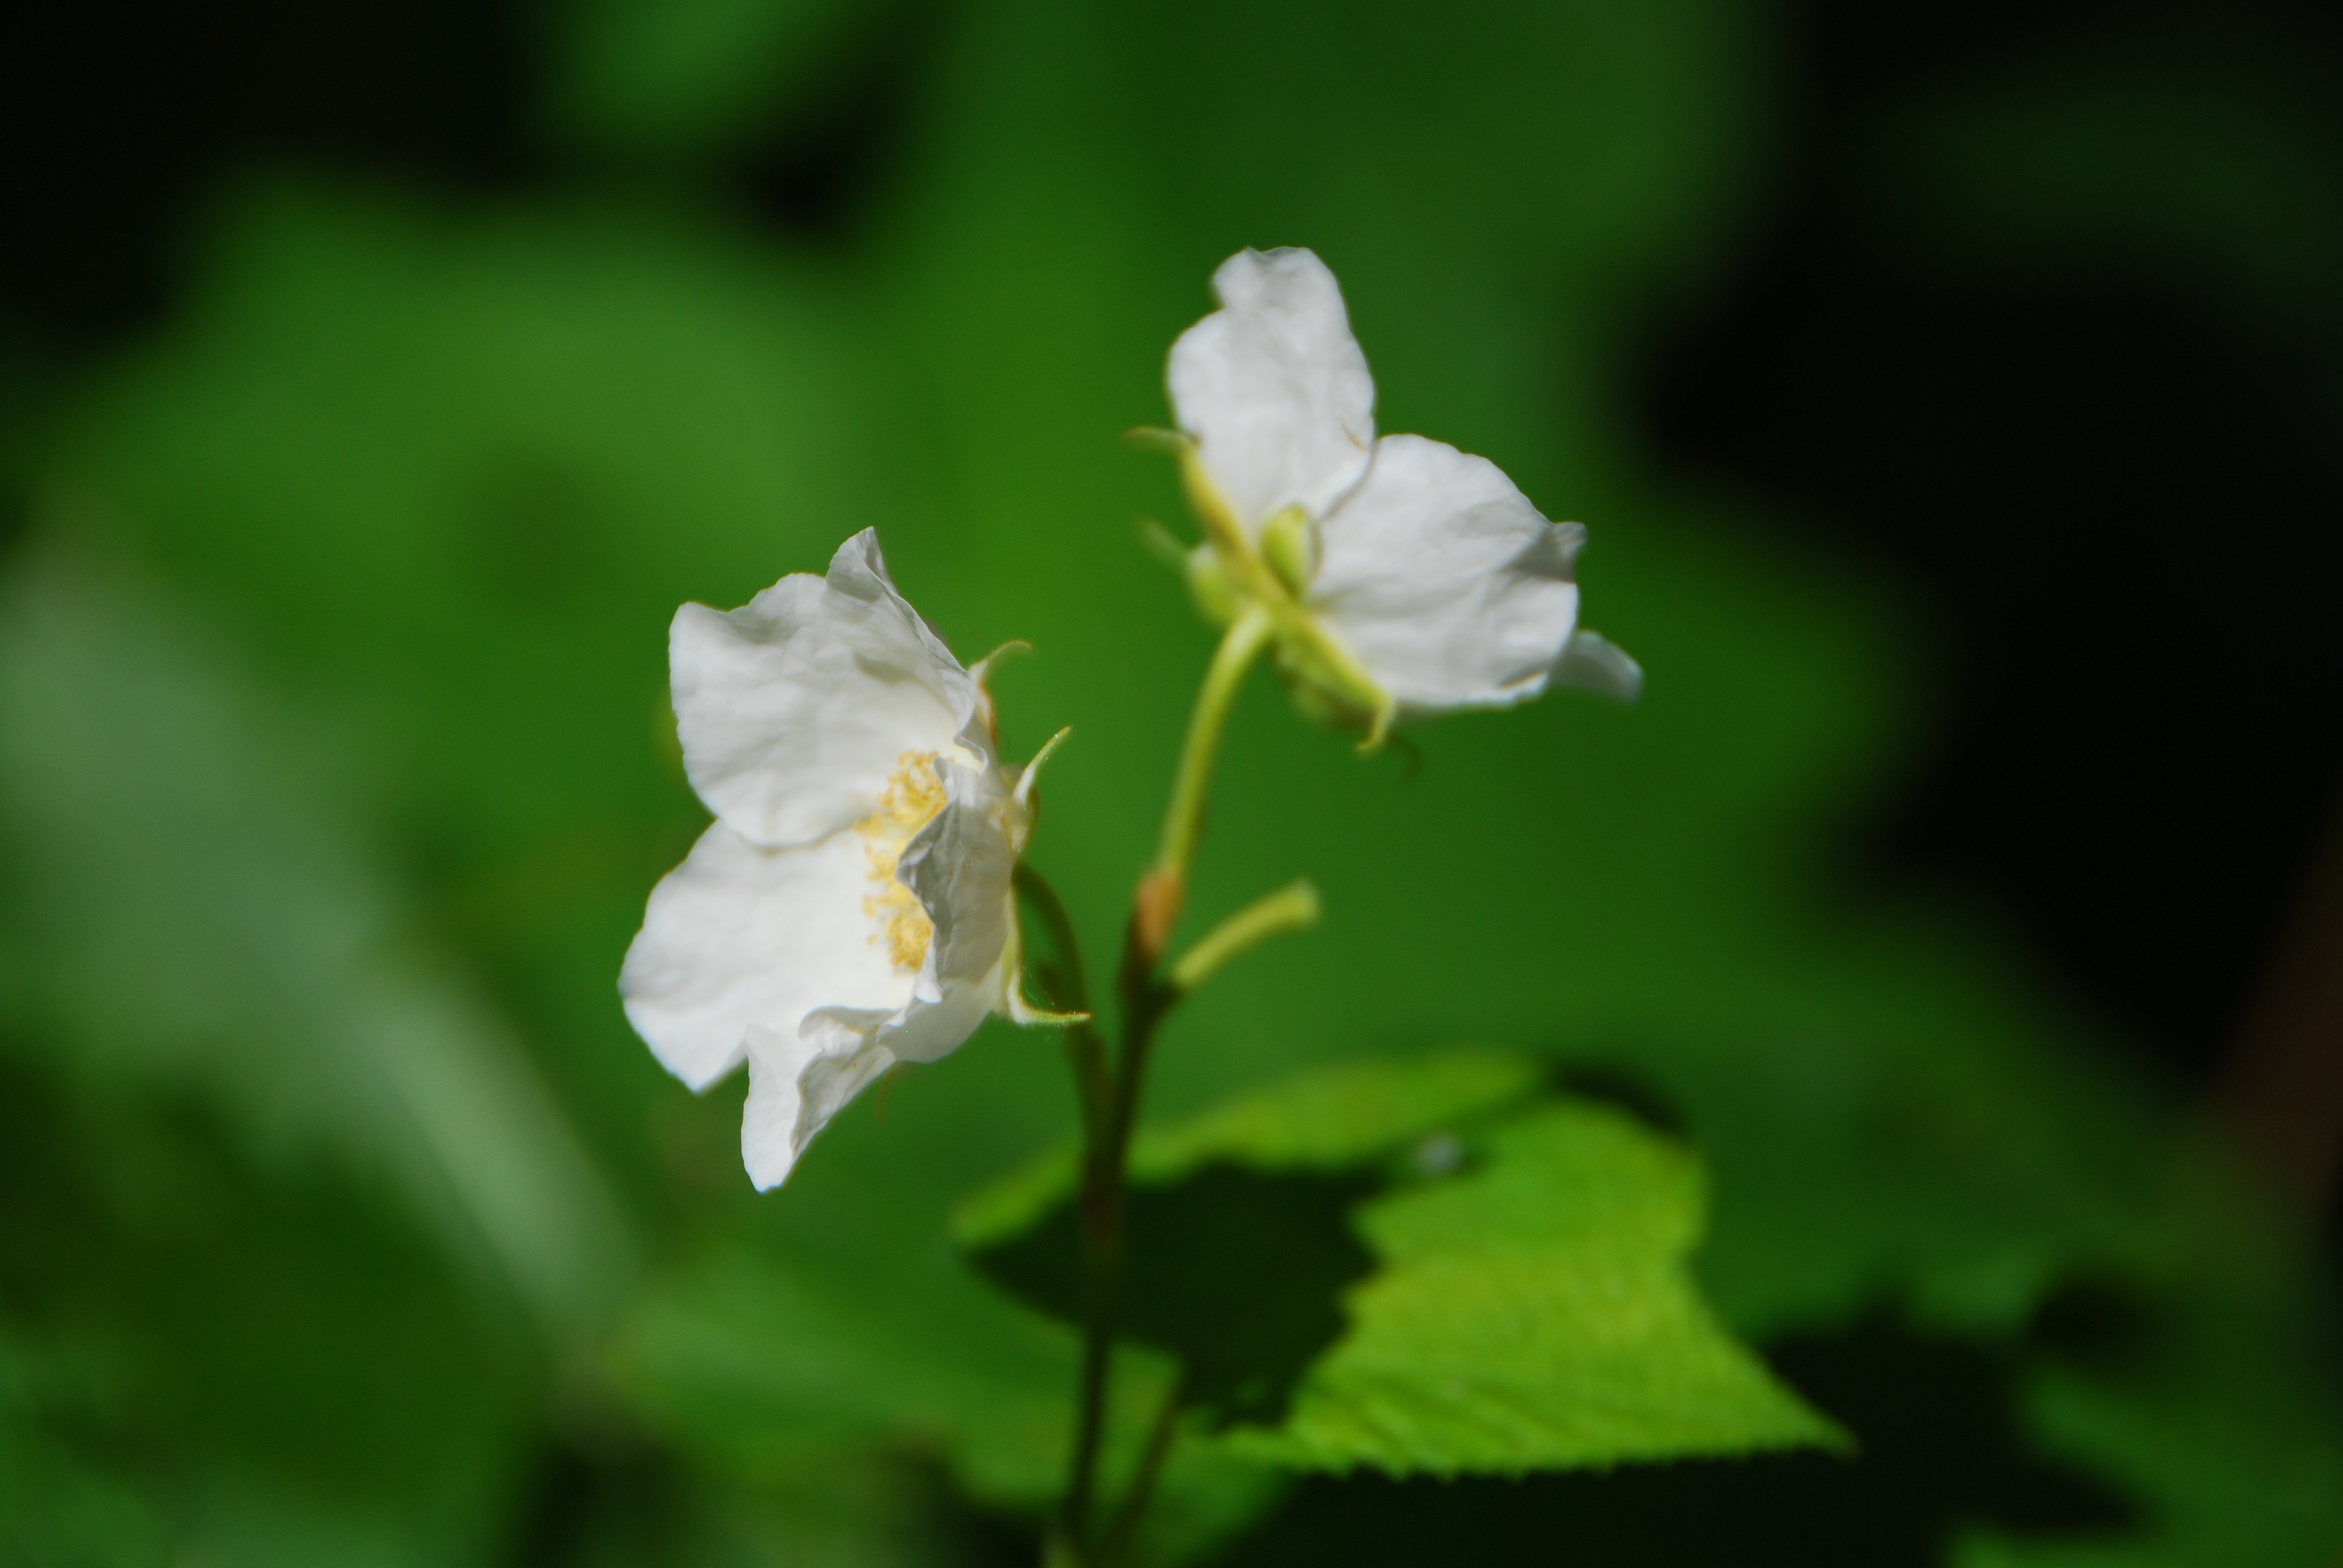 2 white petaled flowers